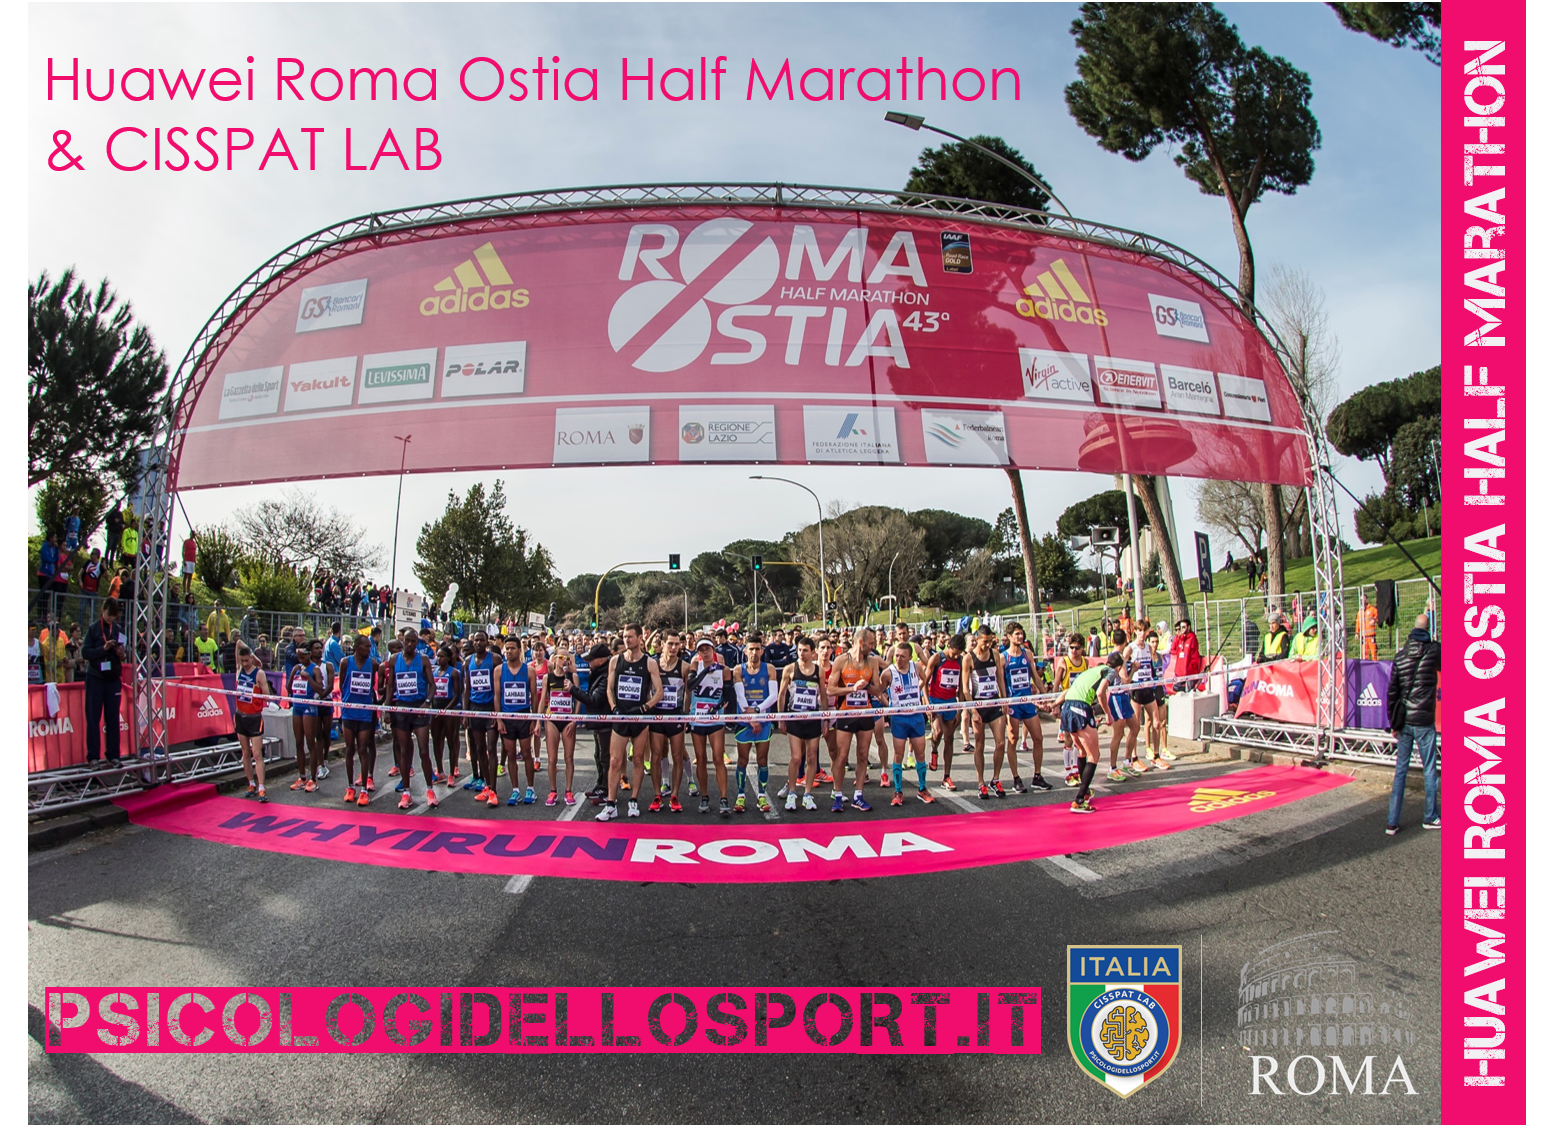 Huawei Roma Ostia Half Marathon